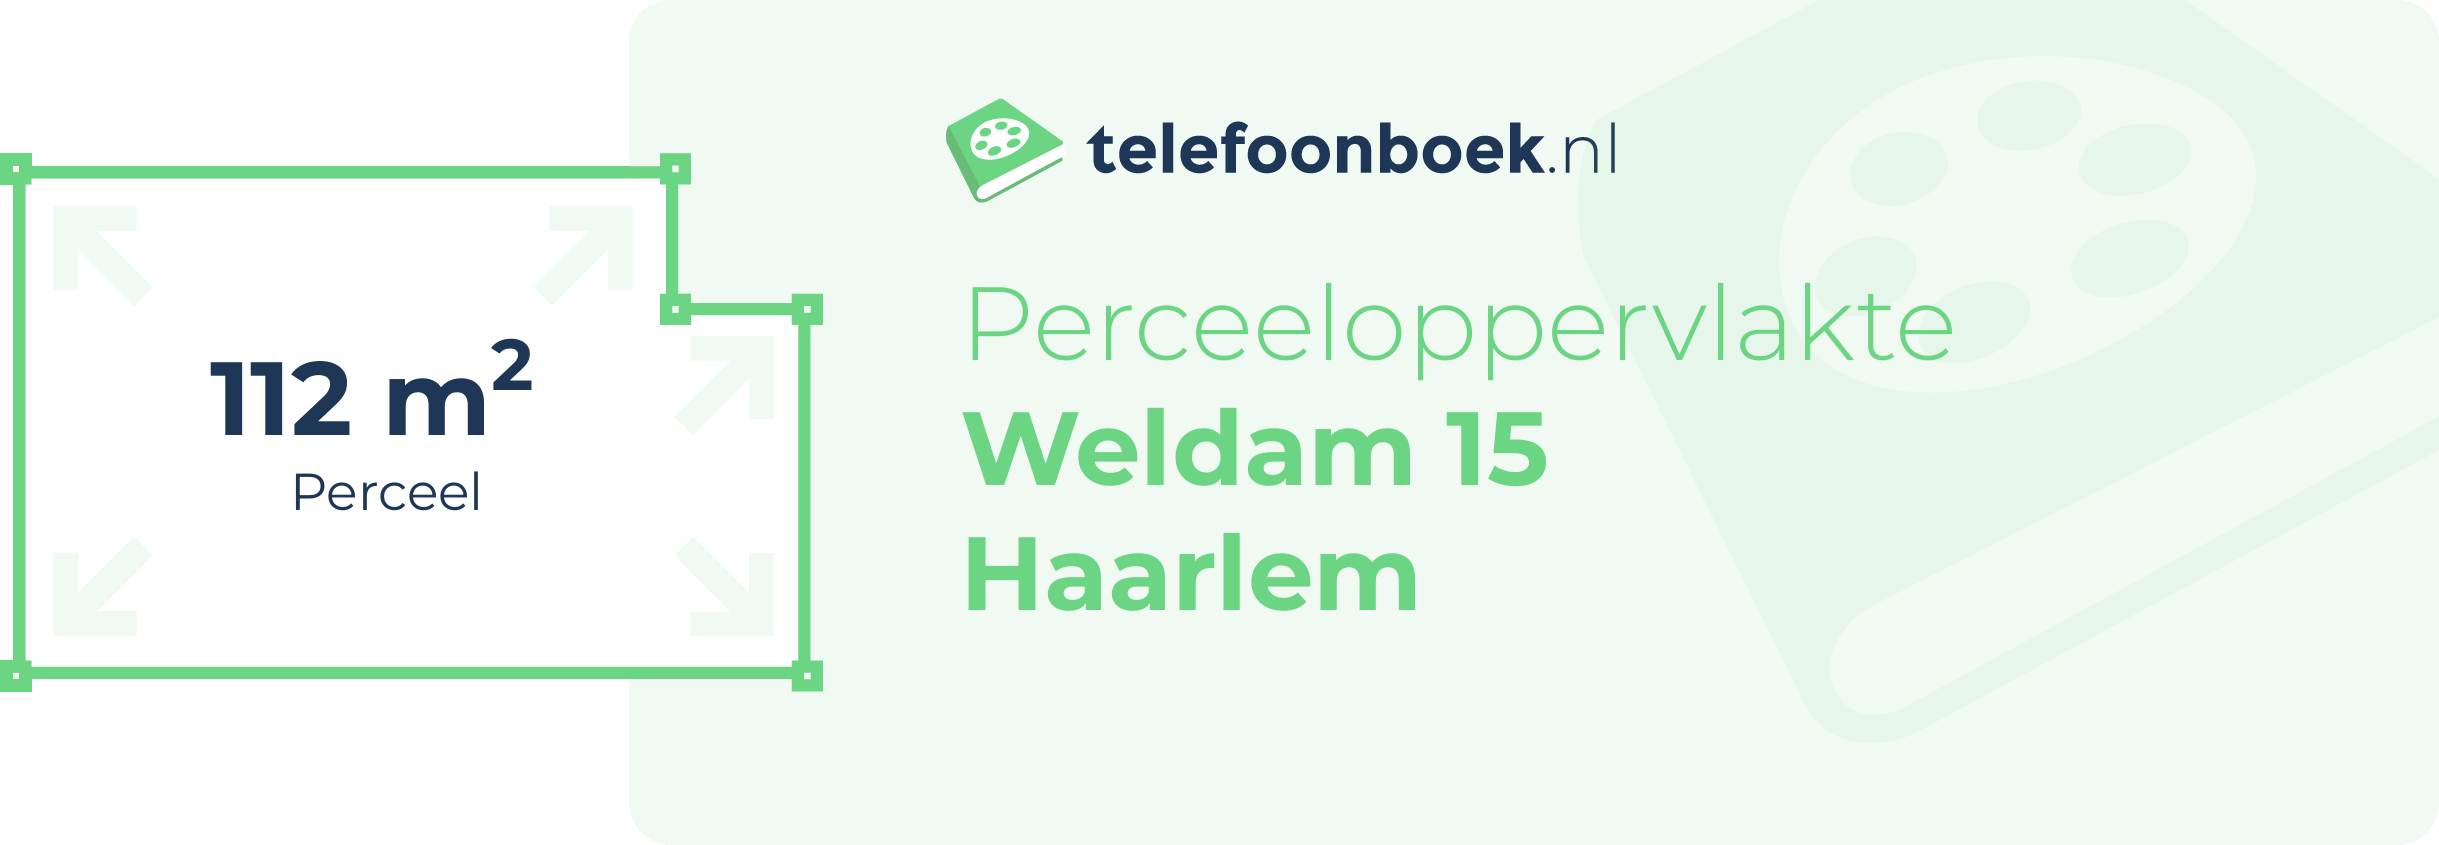 Perceeloppervlakte Weldam 15 Haarlem